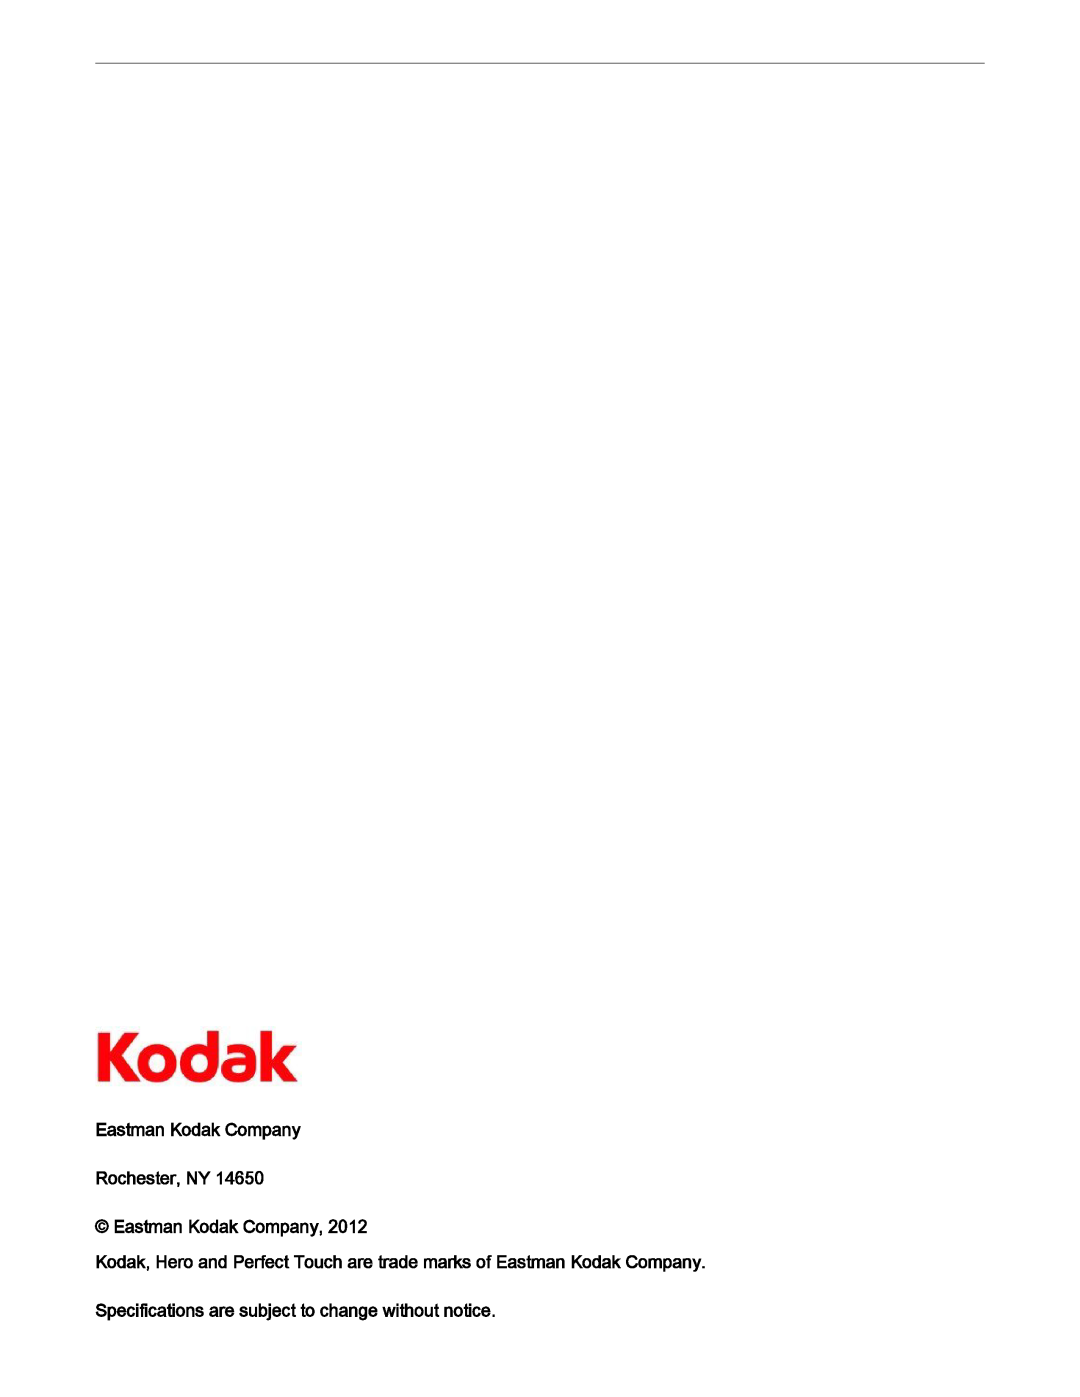 Kodak 2.2 Eastman Kodak Company Rochester, NY Eastman Kodak Company, Specifications are subject to change without notice 